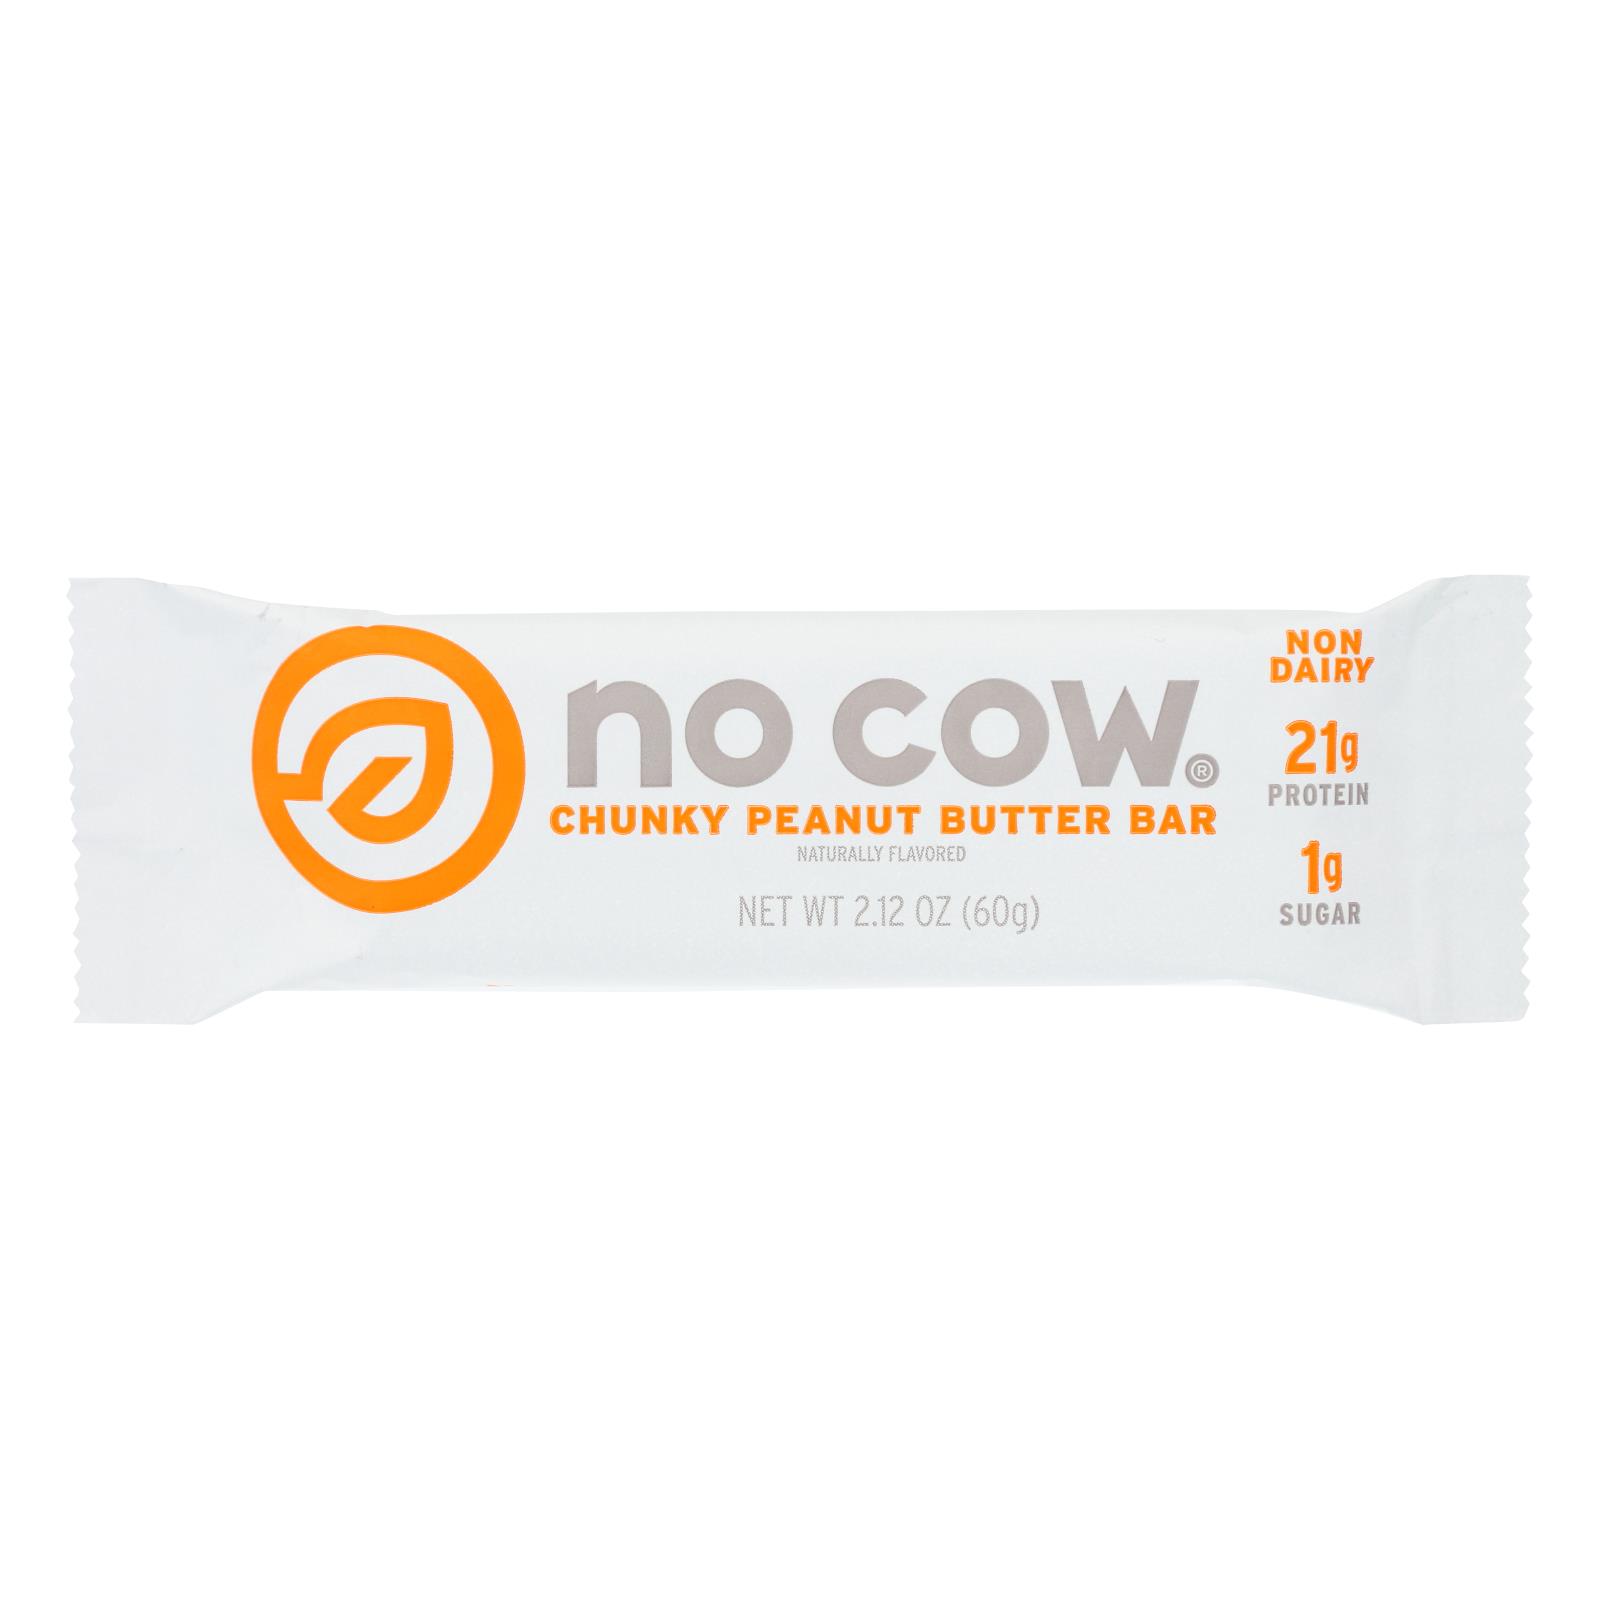 No Cow Bar Chunky Peanut Butter Bar - 12개 묶음상품 - 2.12 OZ